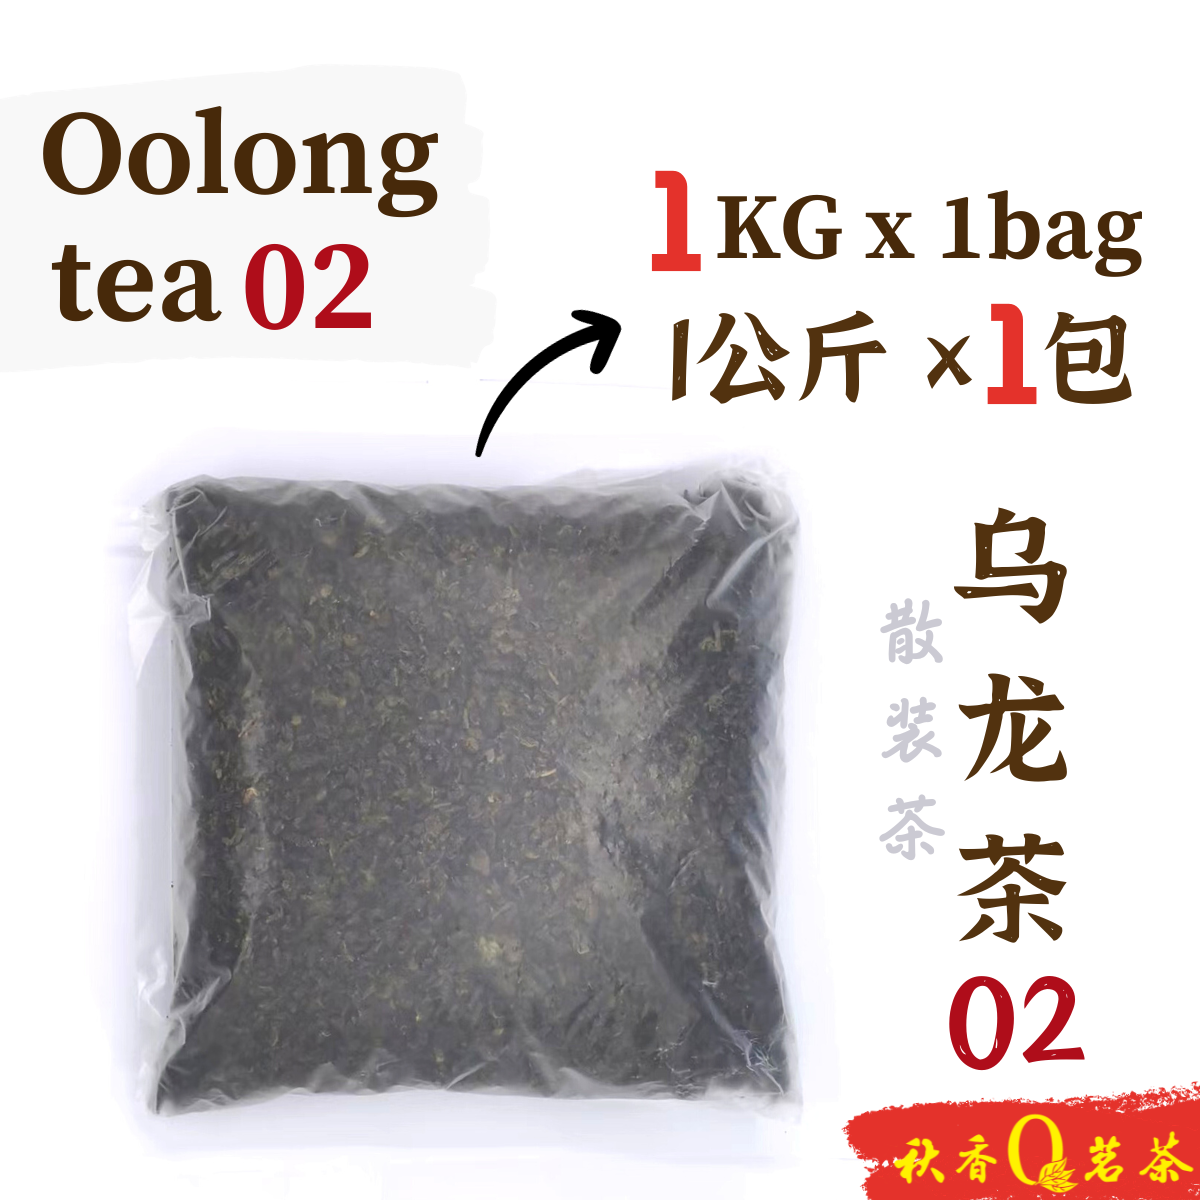 乌龙茶 02 Oolong Tea 02 【1kg】